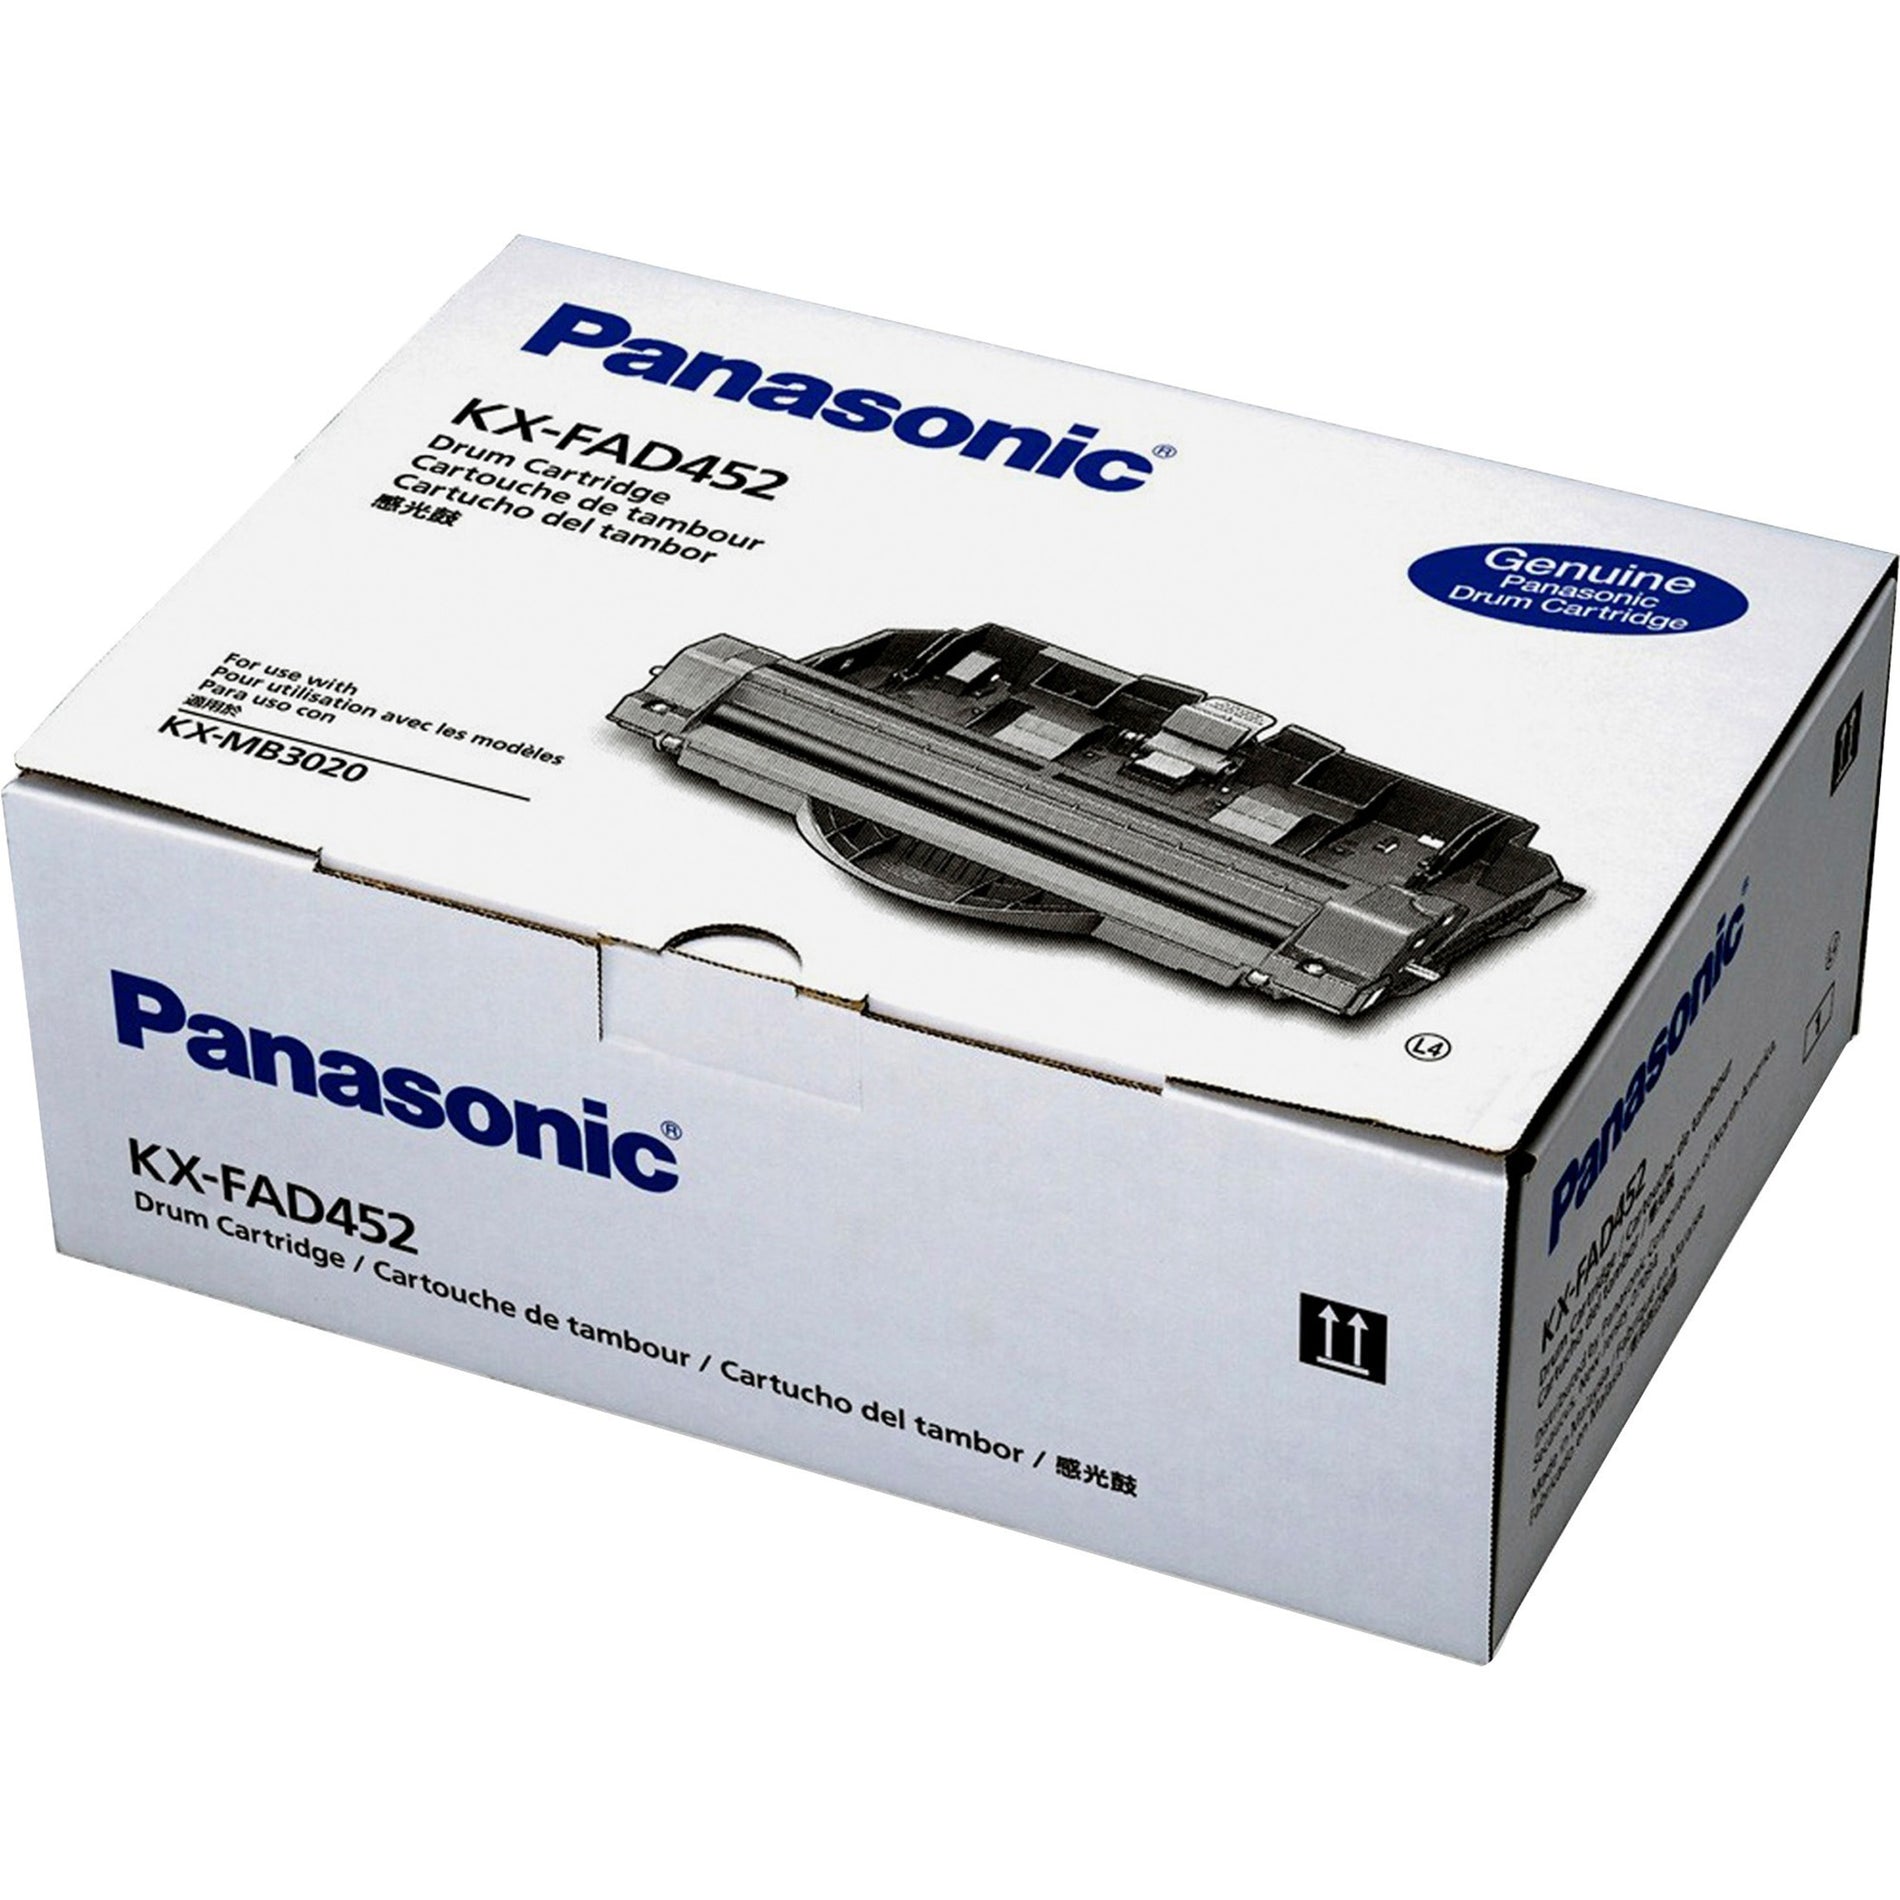 Panasonic KX-FAD452 Laser Drum Unit - High Yield, Lifetime Warranty